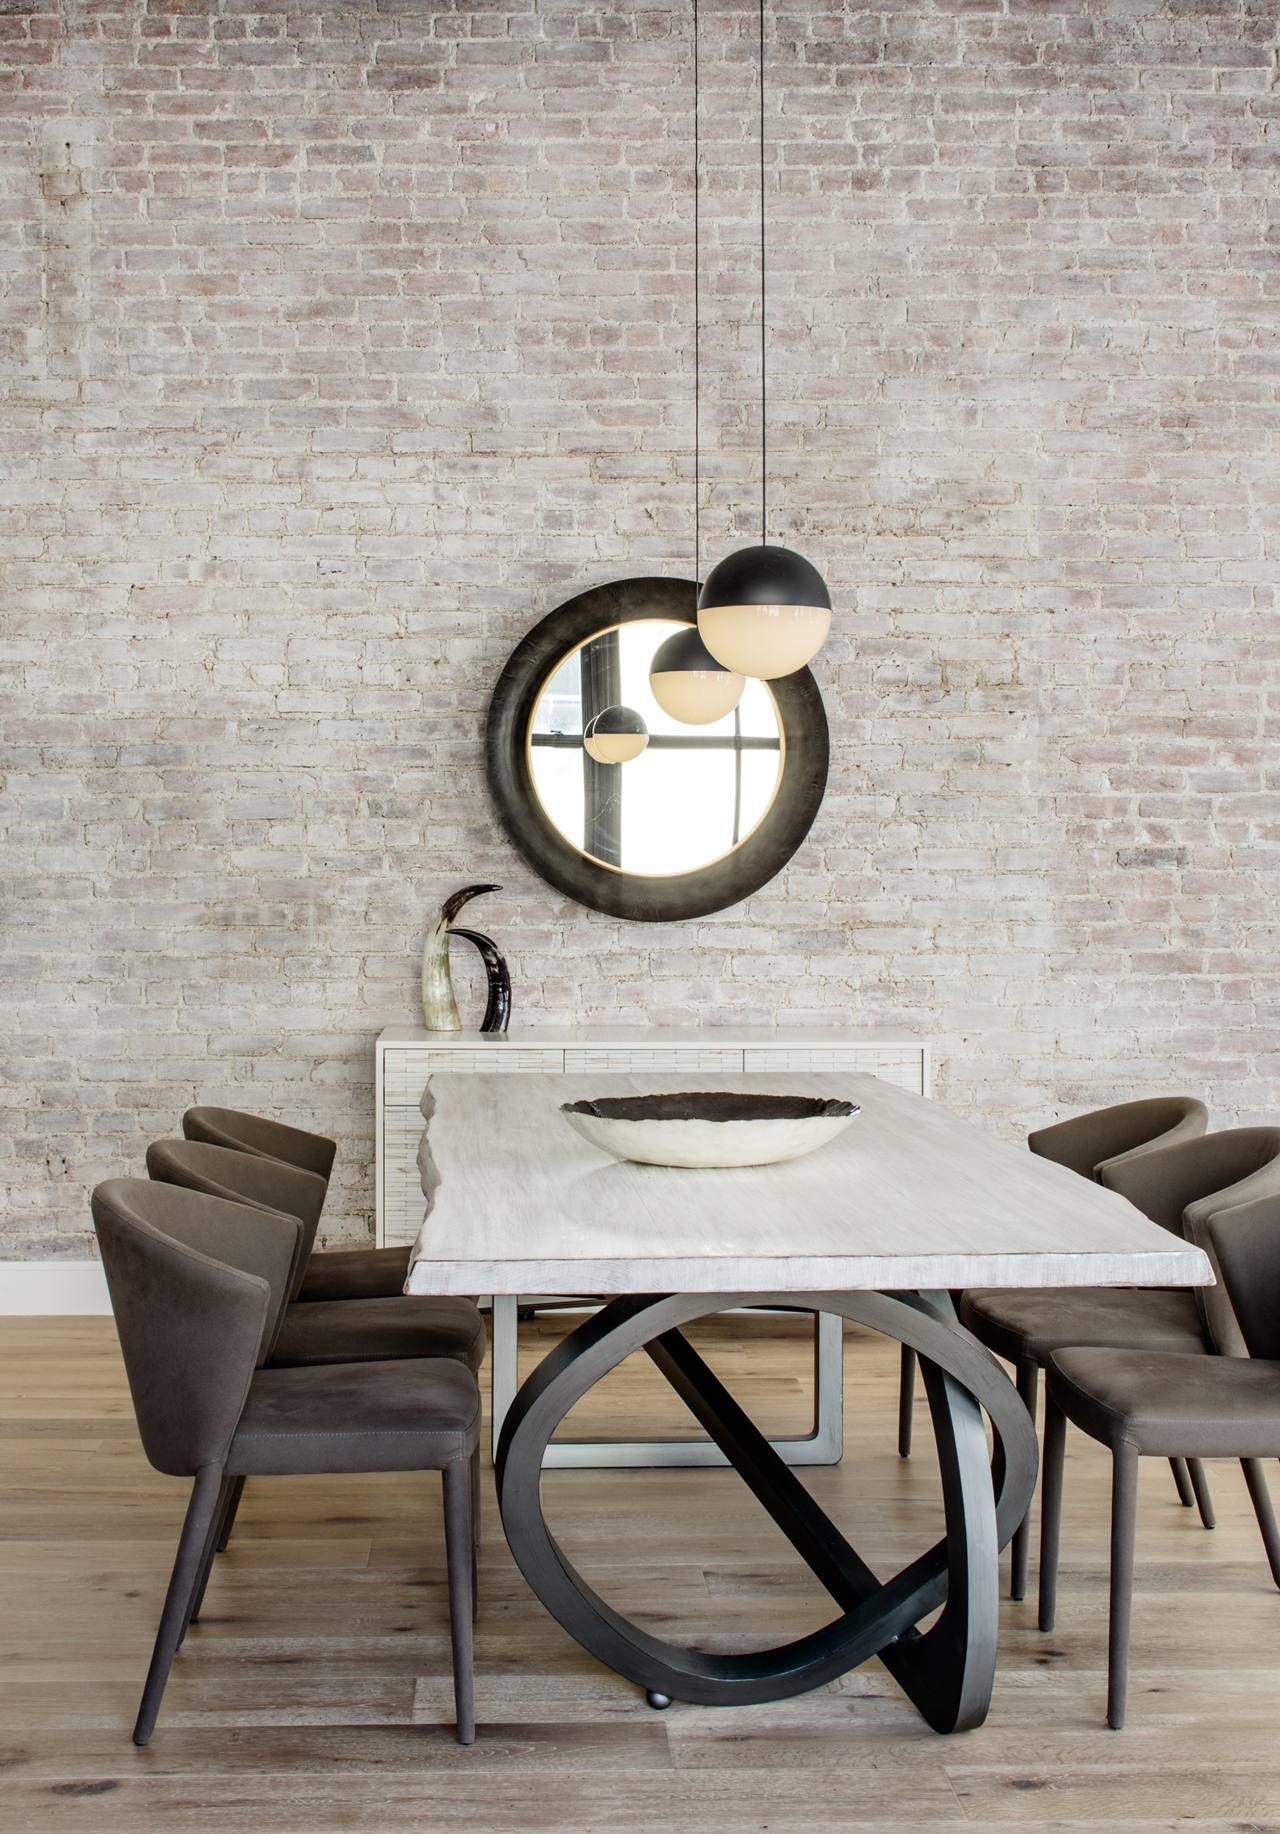 Industrial Dining Room Lighting Designs Shine in a New York Loft (1)